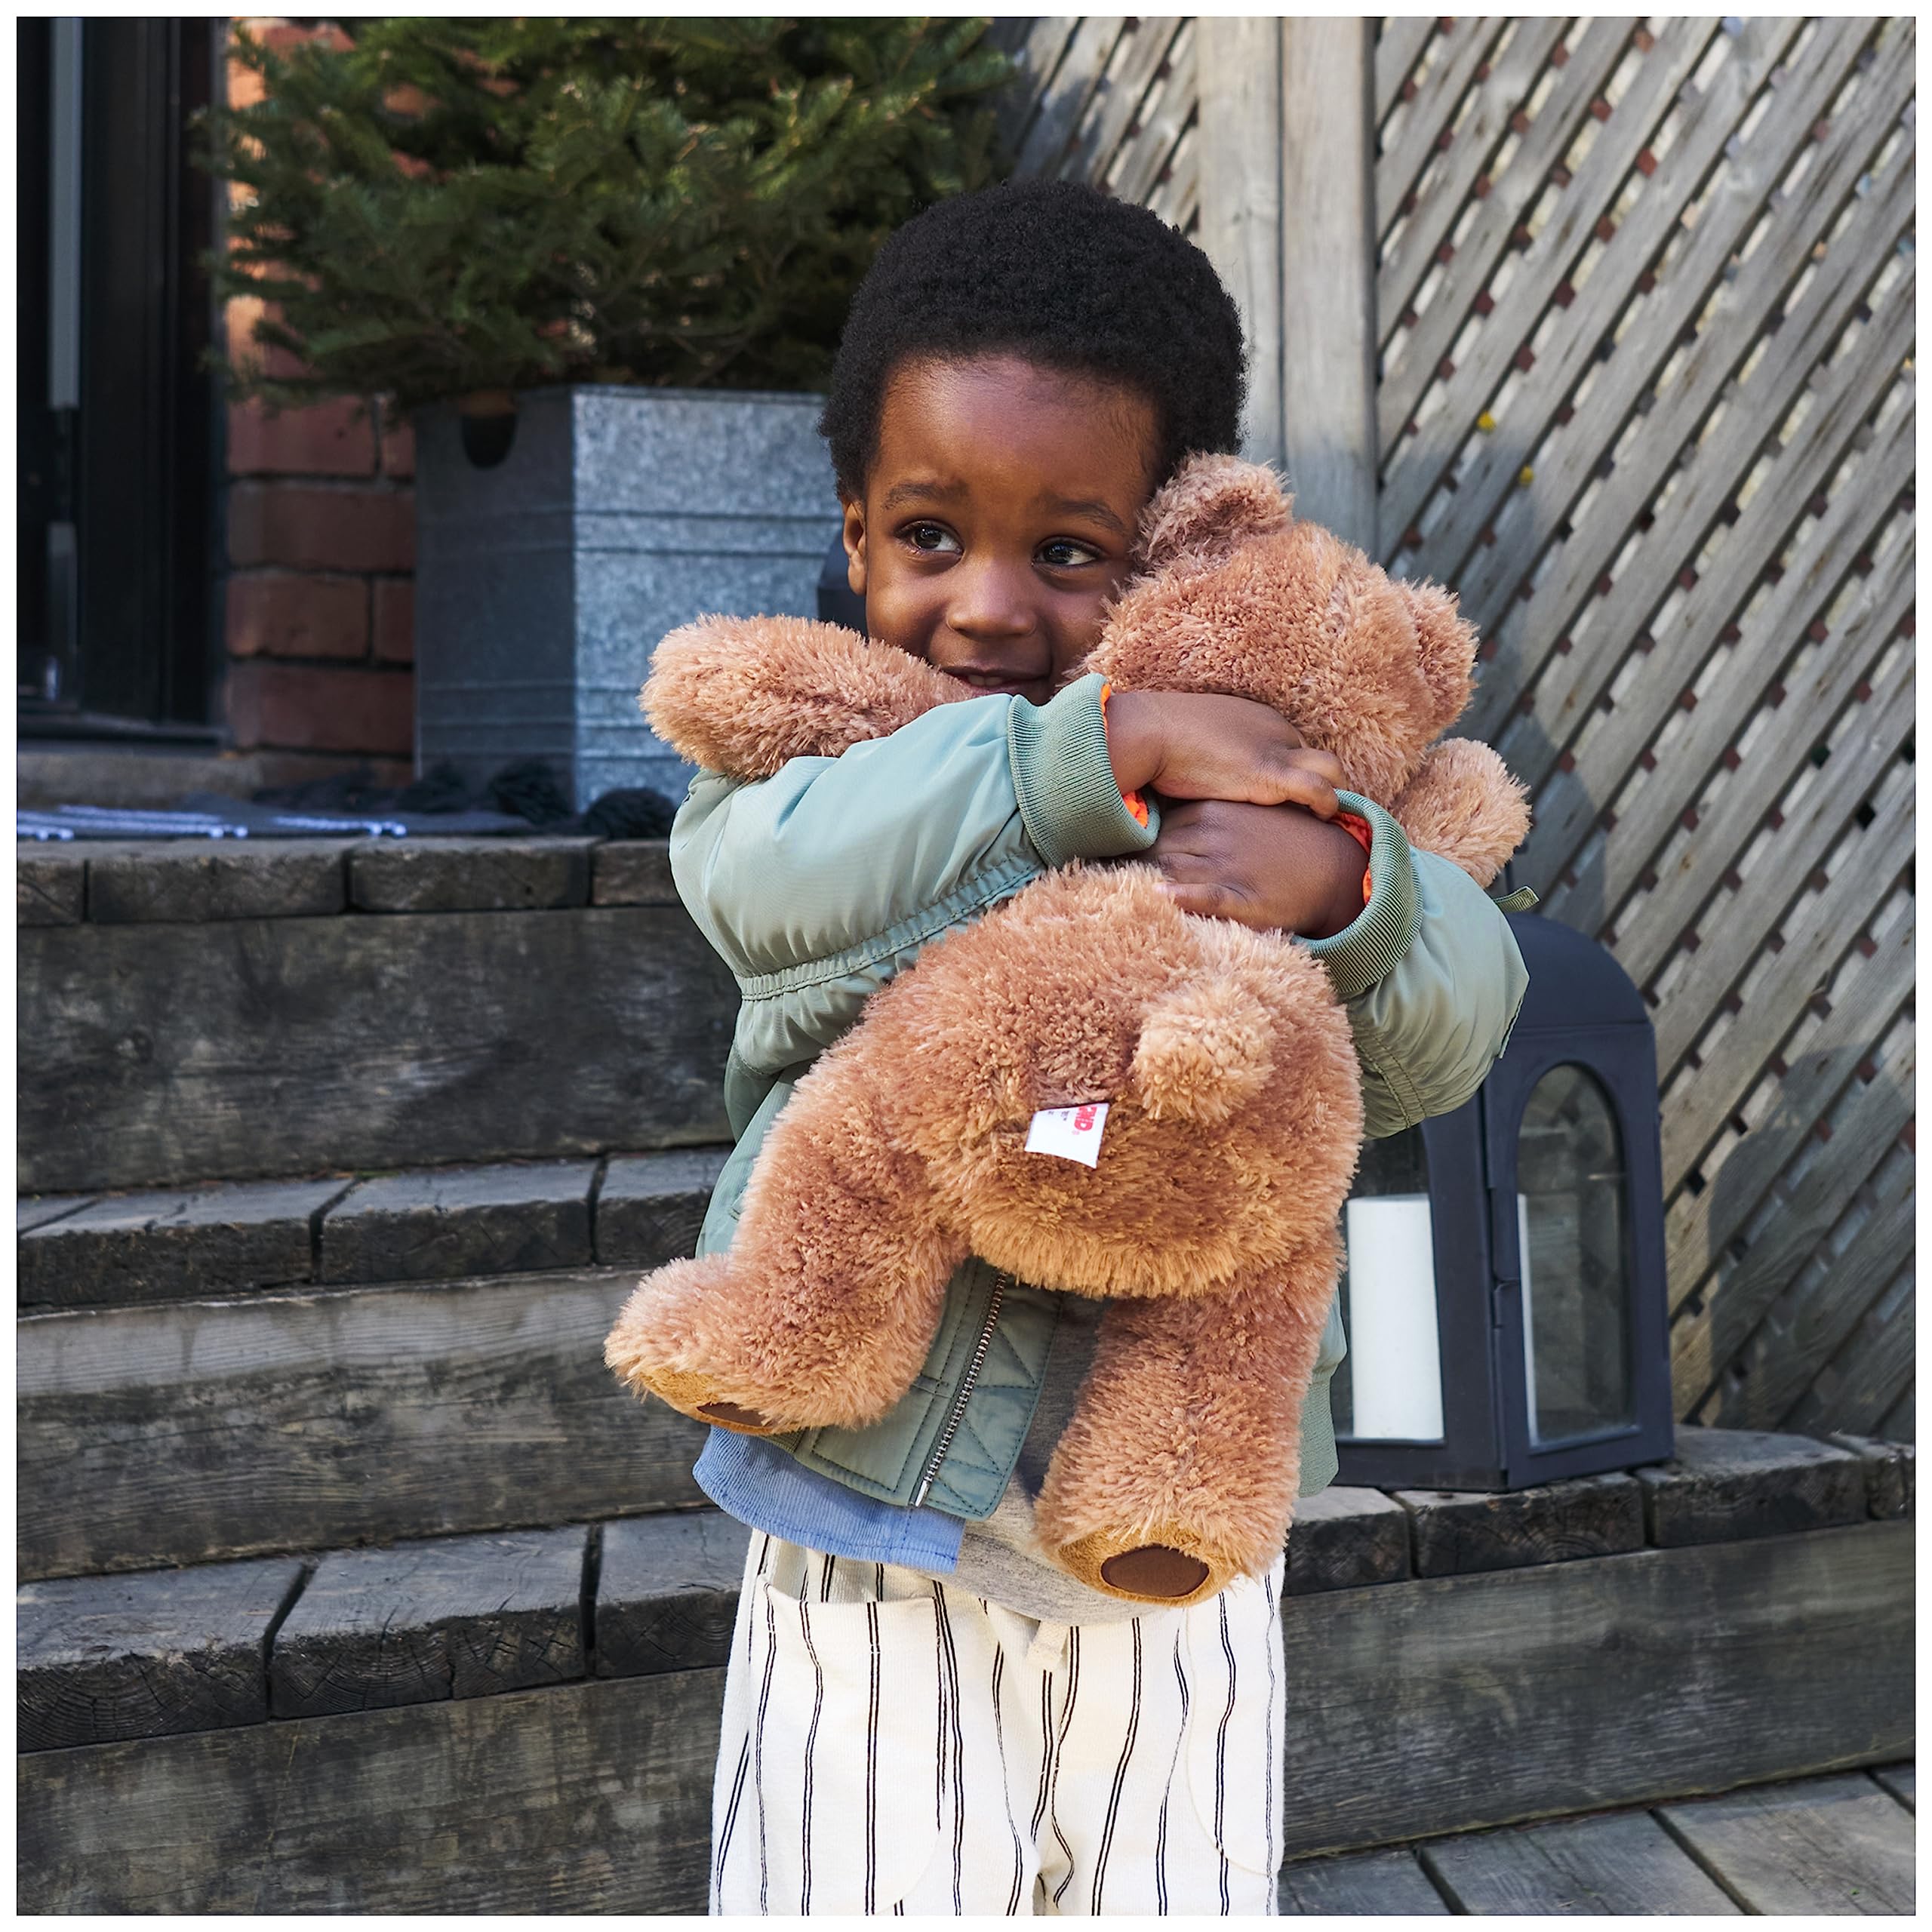 GUND Slumbers Teddy Bear, Premium Stuffed Animal for Ages 1 & Up, Brown, 17”